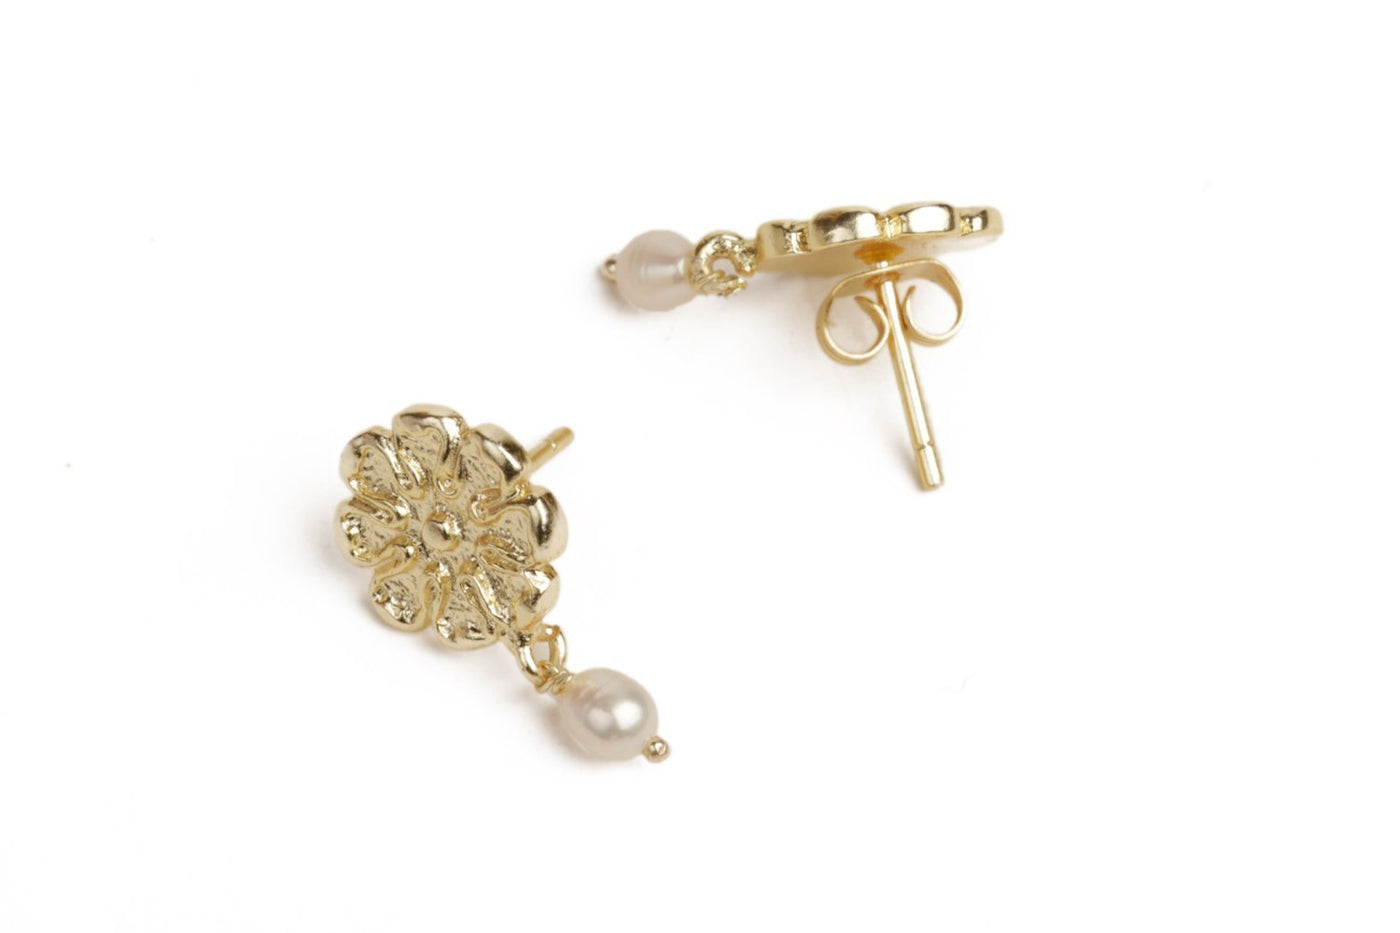 Beautiful Flower Stud with Pearl Gold Earrings - Stilskii